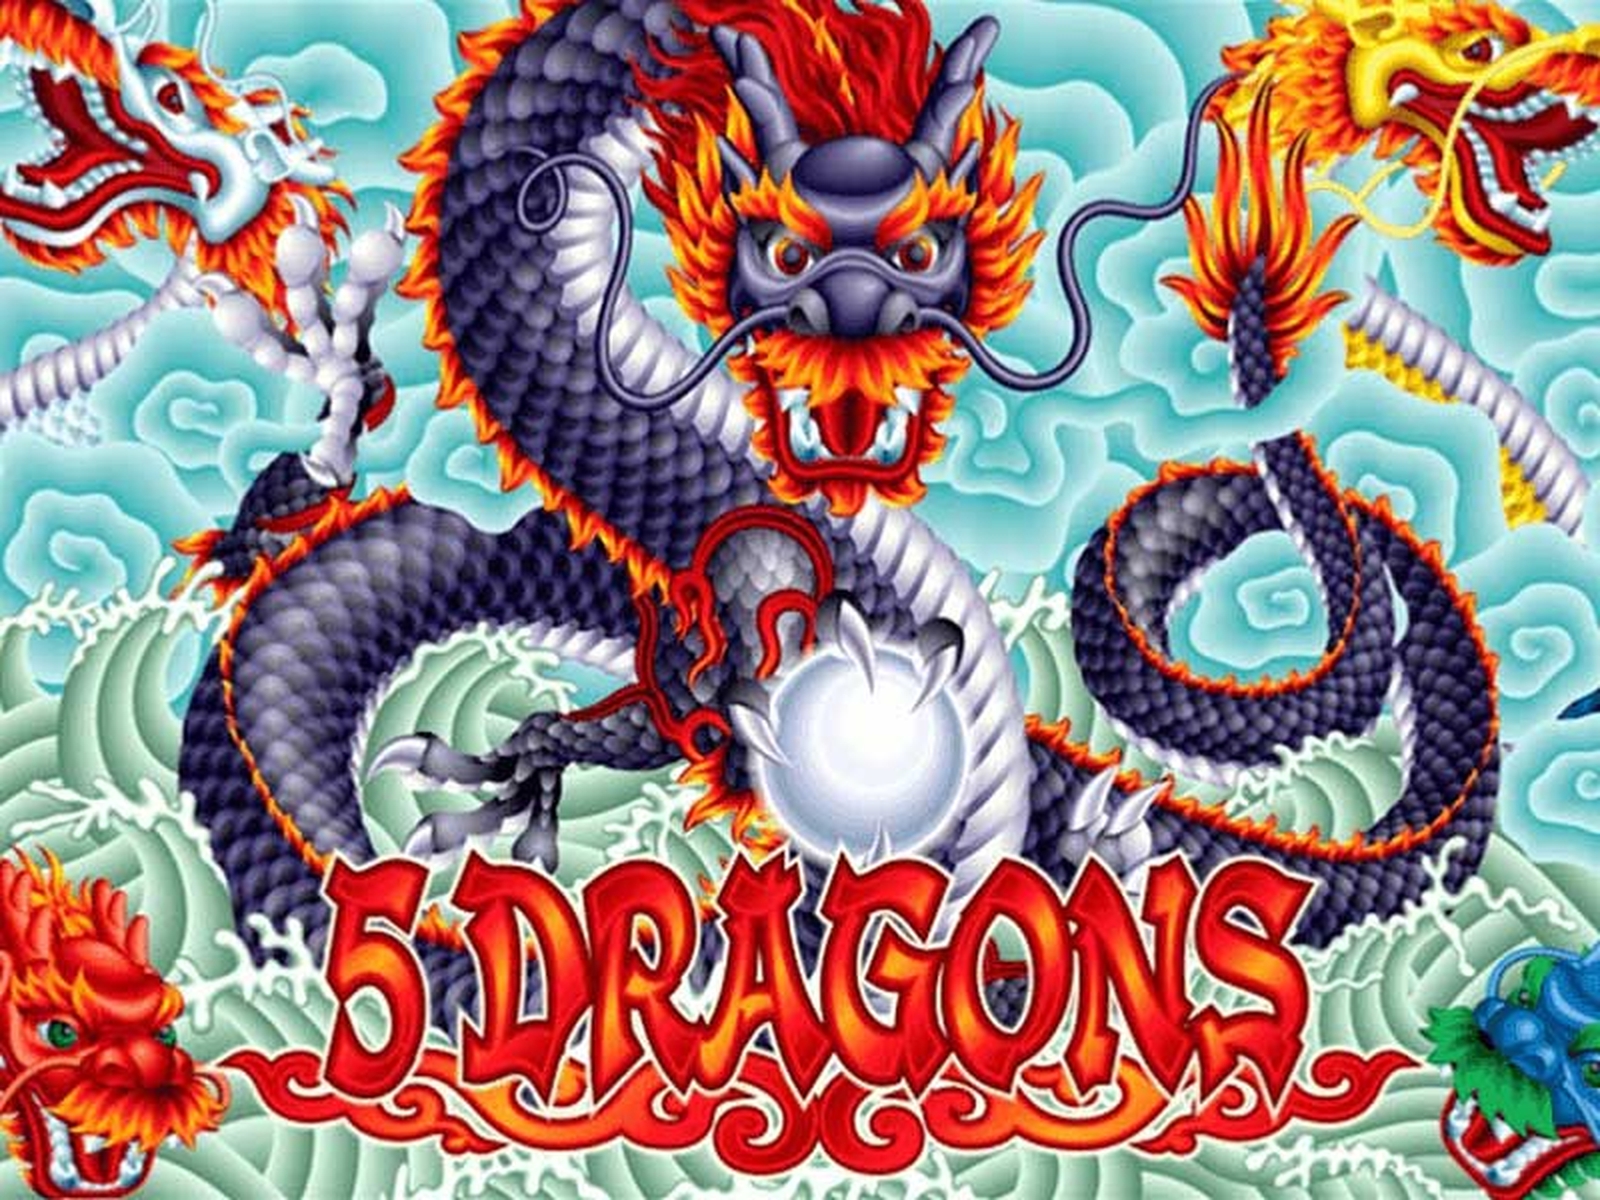 5 Dragons demo